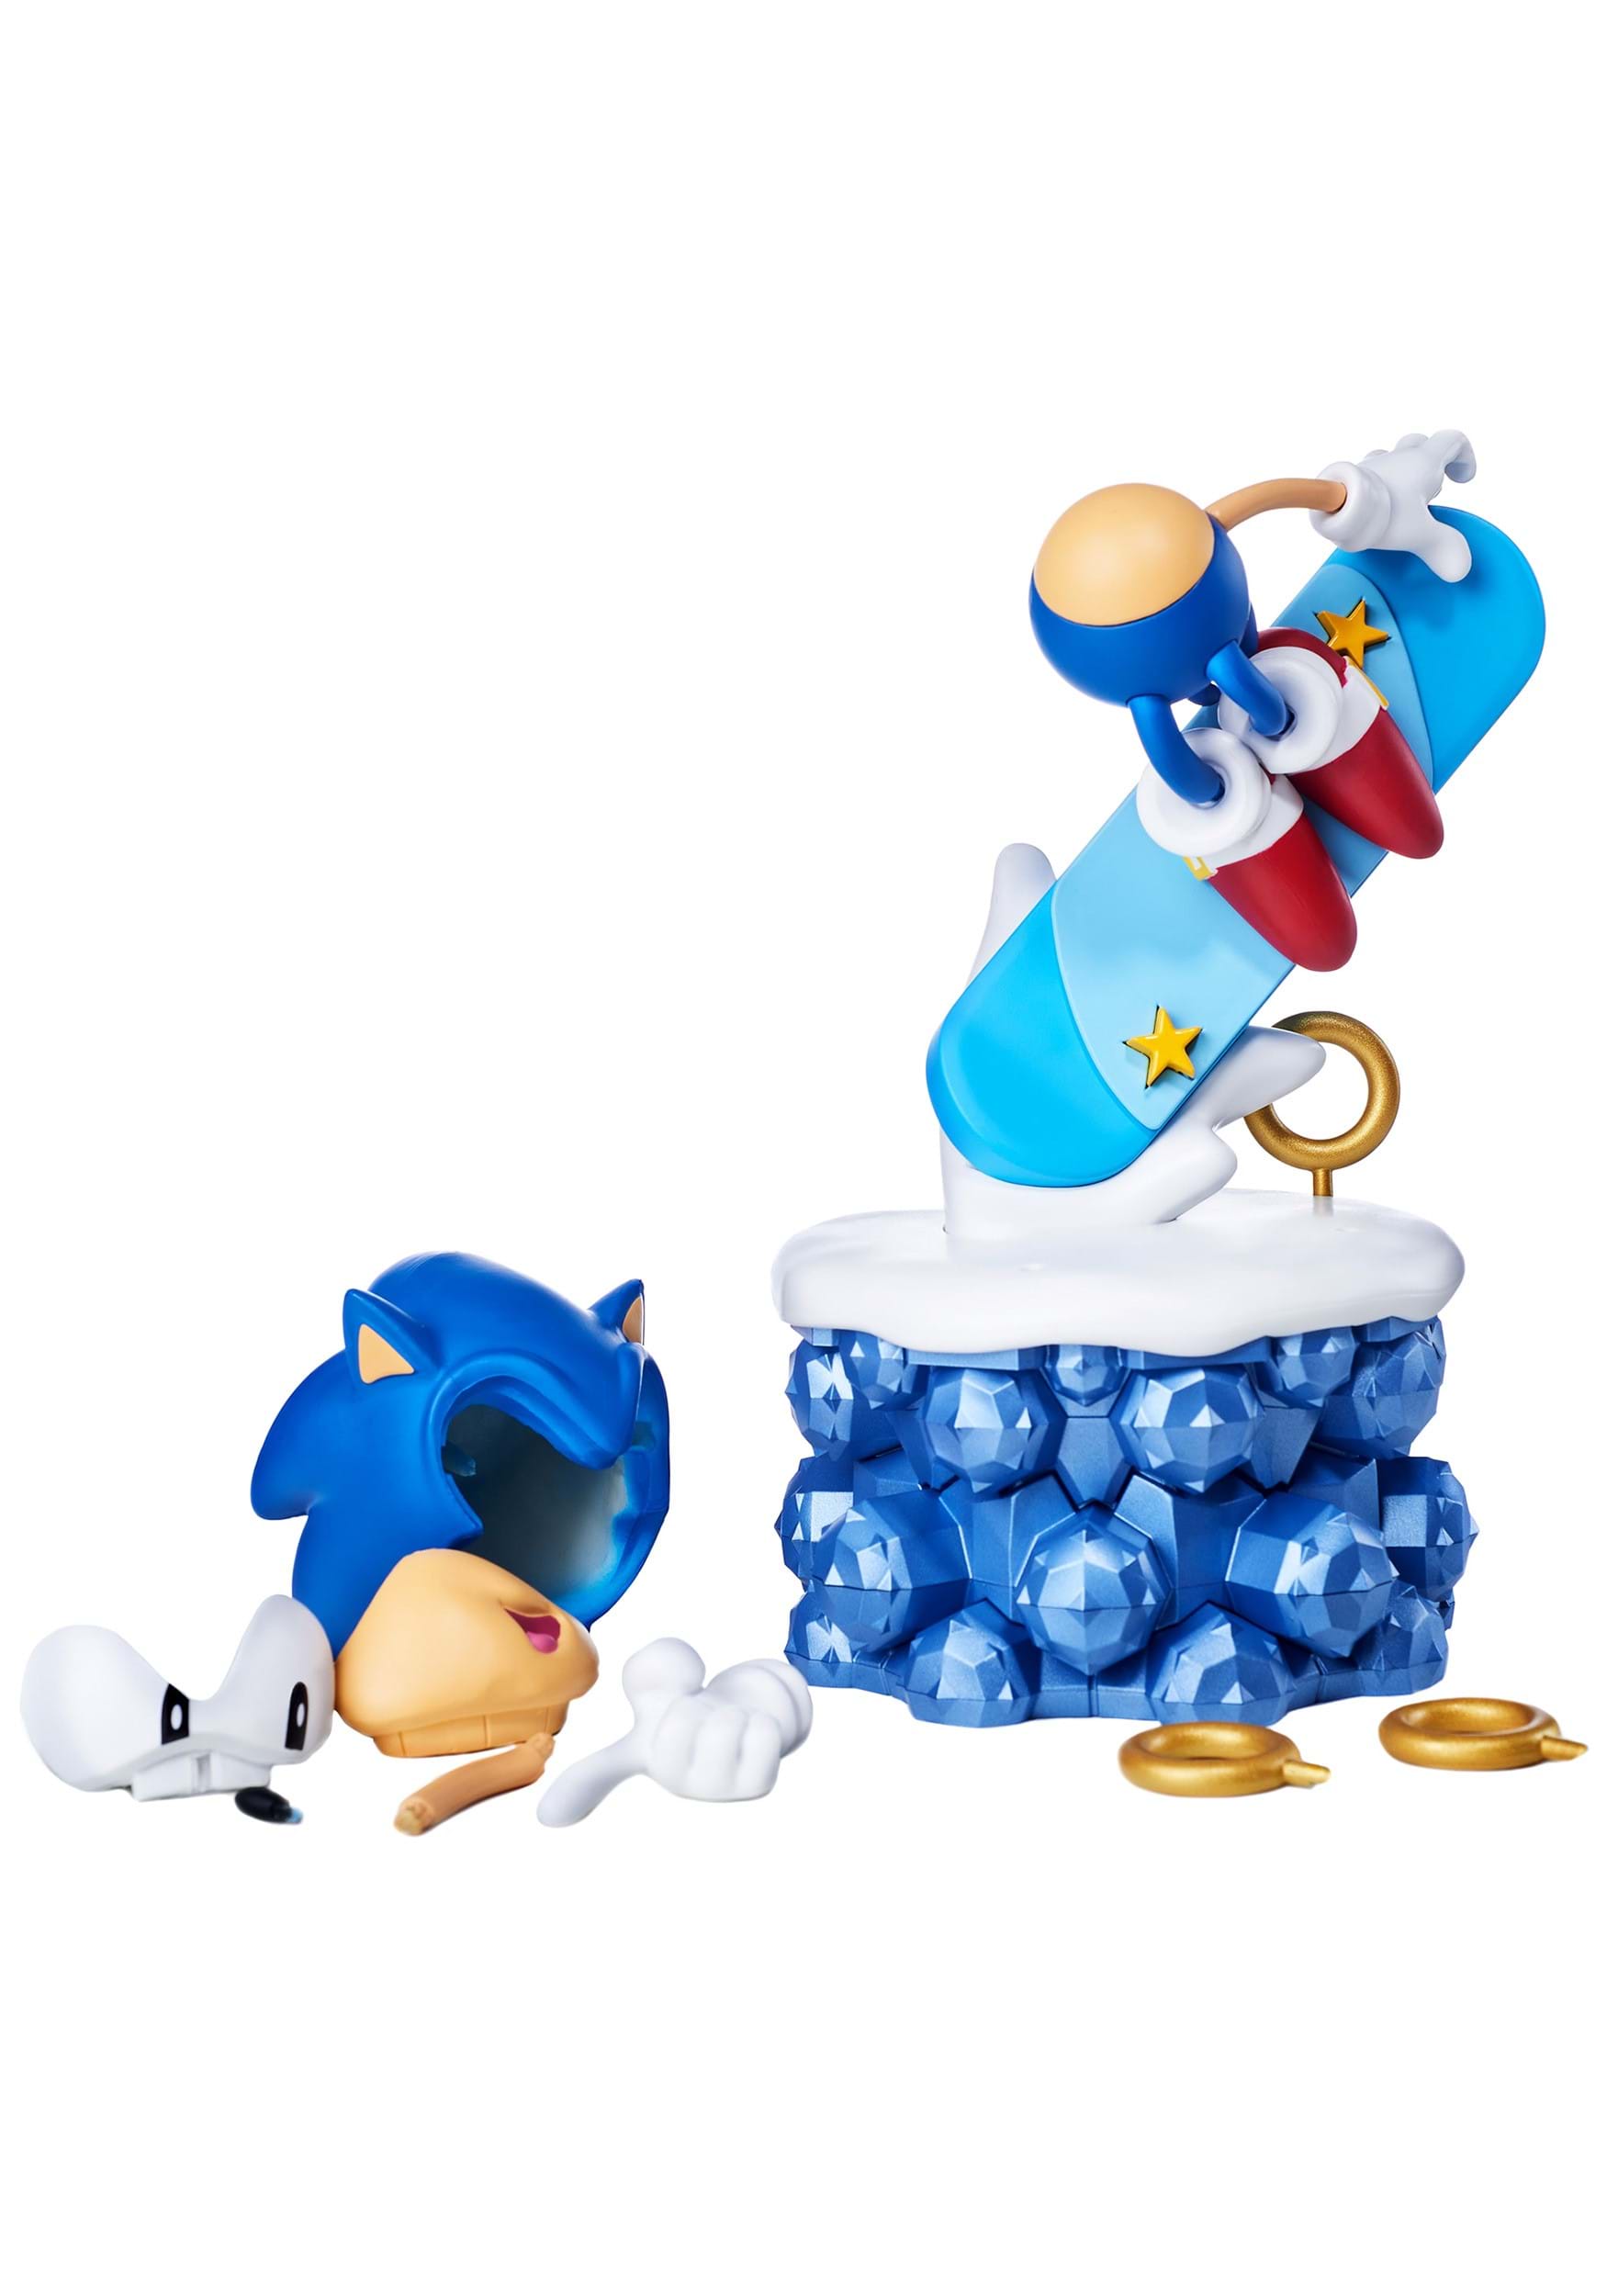 Sonic The Hedgehog Character Advent Holiday Calendar , Advent Calendars